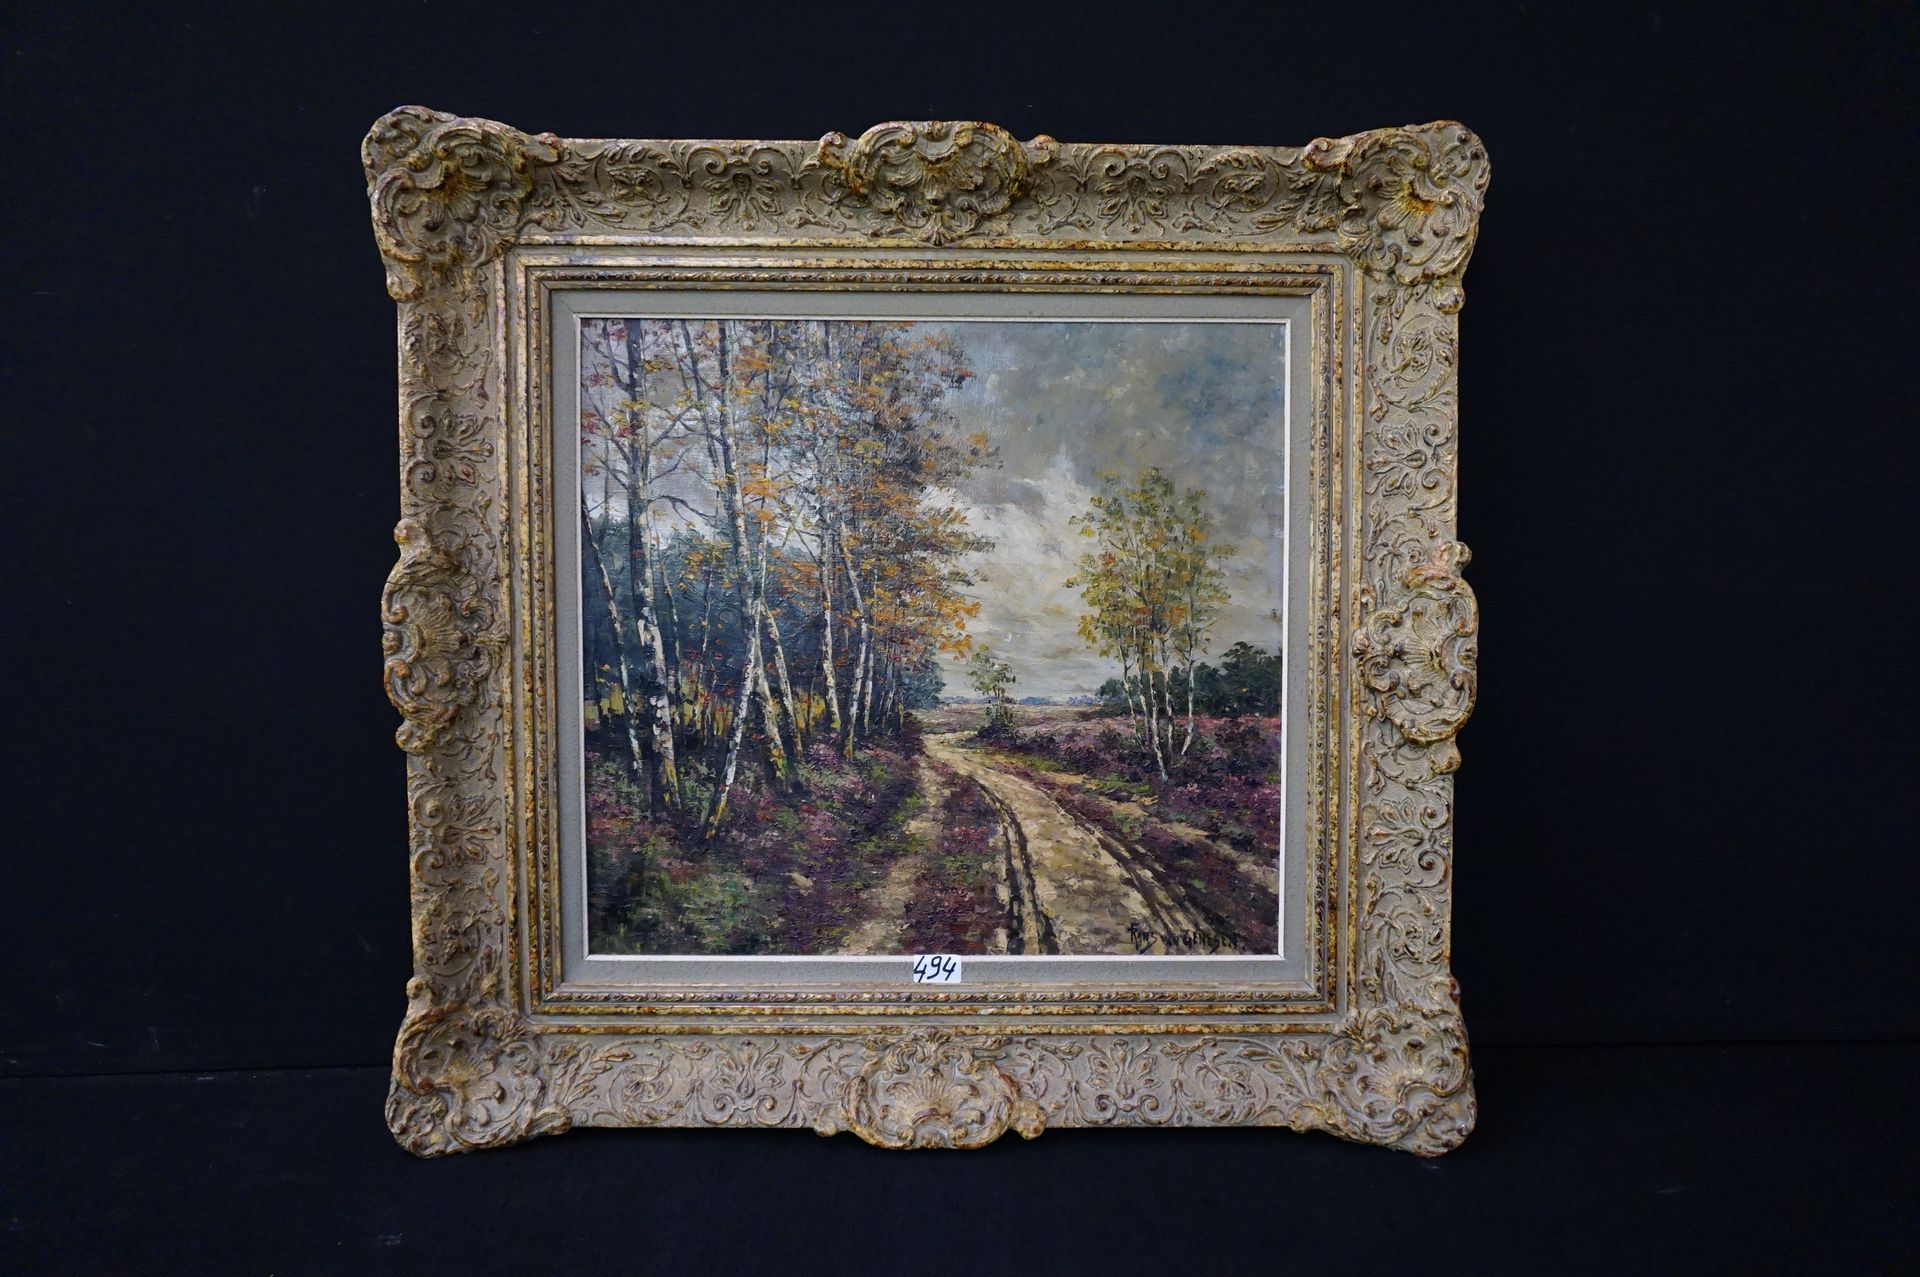 FRANS VAN GENESEN (1887 - 1945) "Heath Landscape" - Oil on canvas - 55 x 60 cm